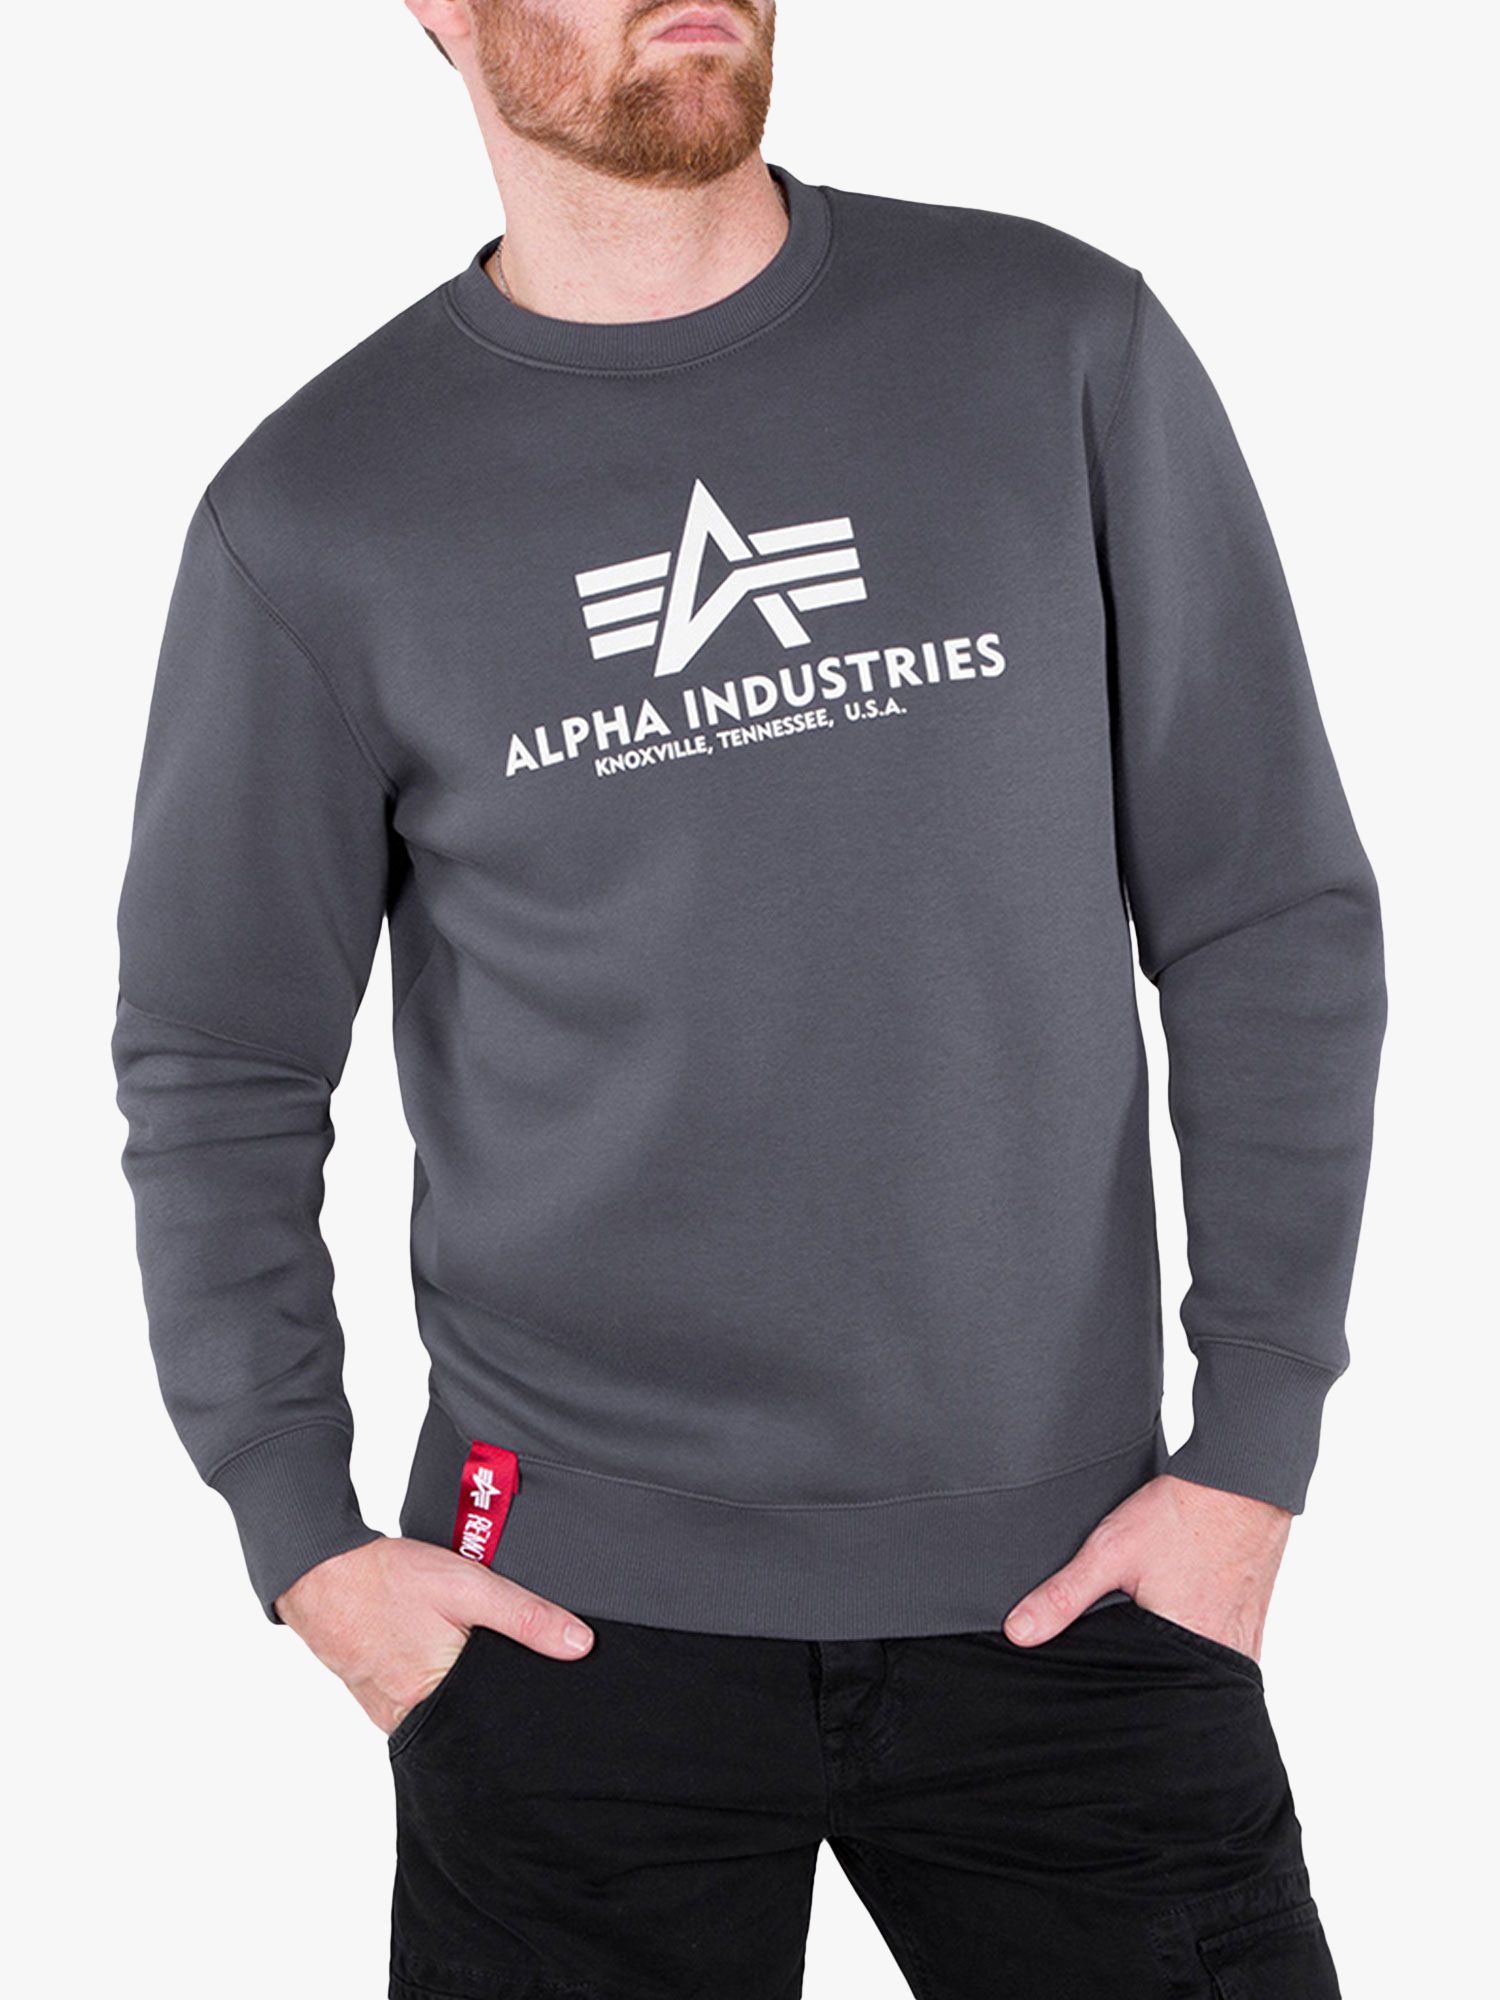 Alpha Industries Basic Grey/Black, XS Sweatshirt, Logo 136